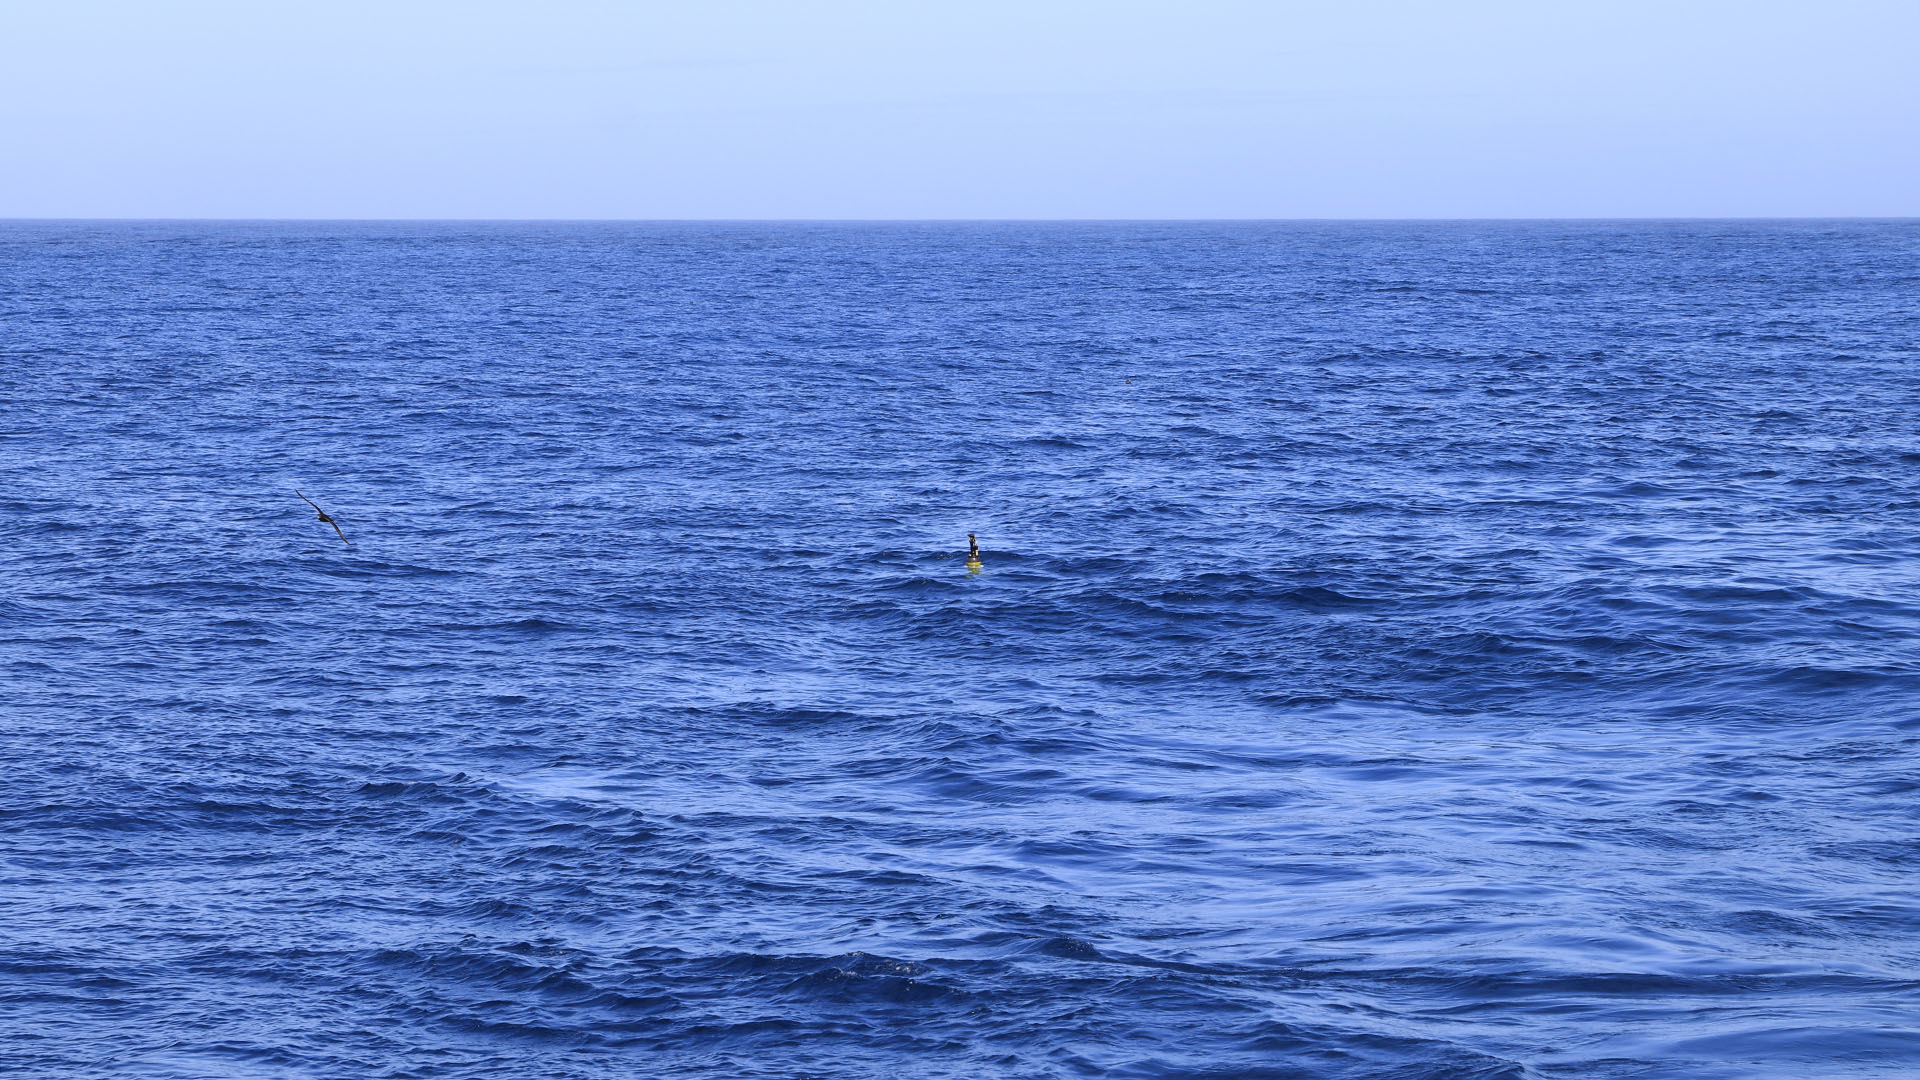 Watching our last BGC float, Belmont Bullkelp, drift away into the vast Indian Ocean